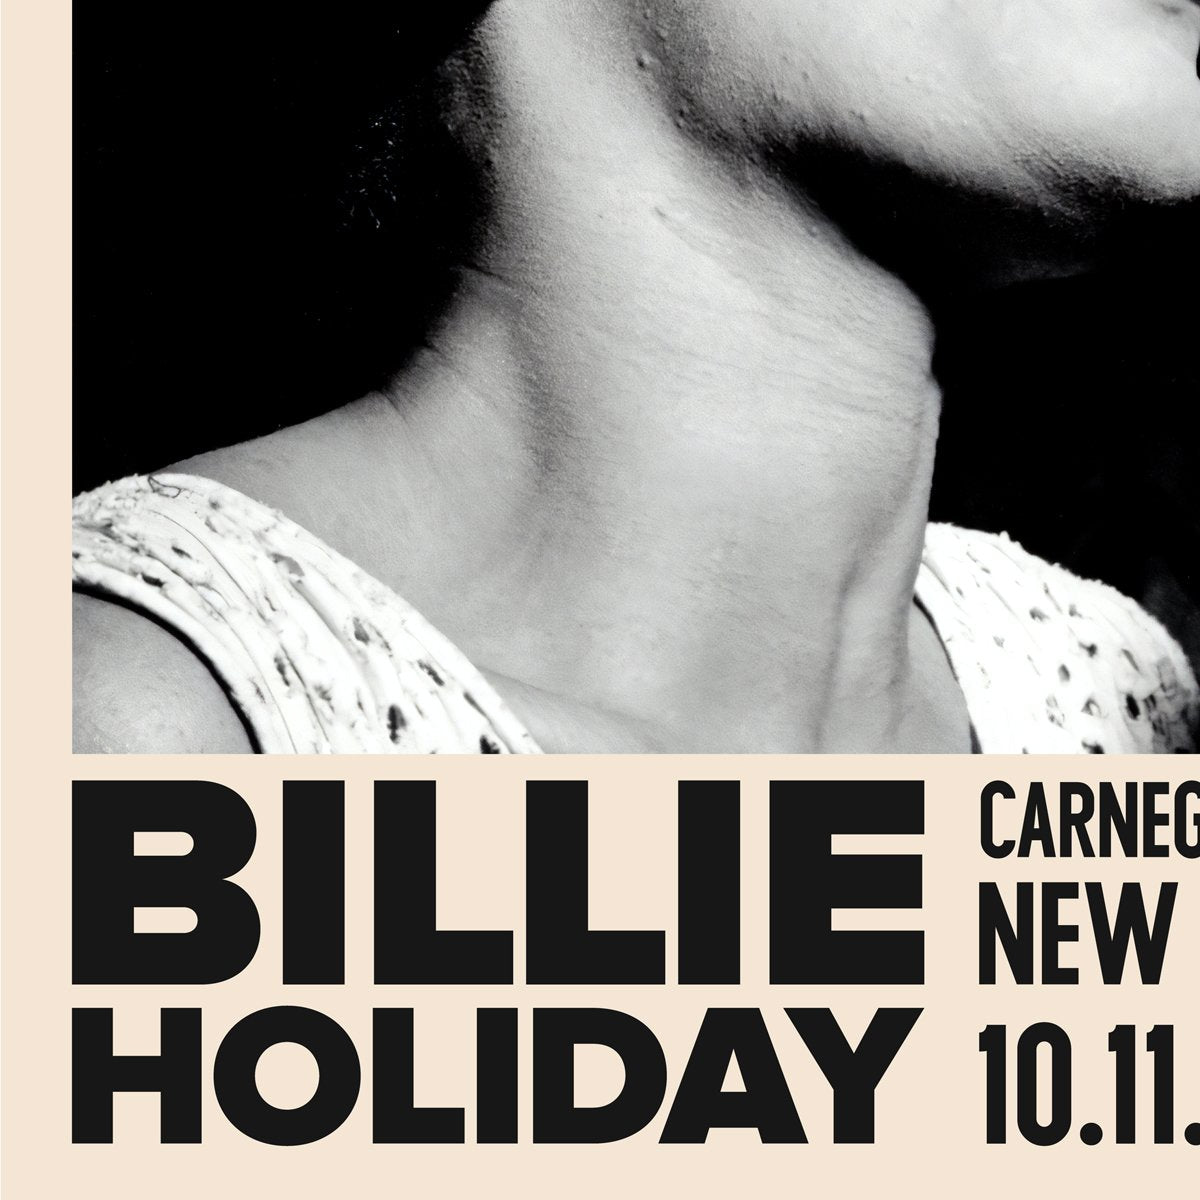 Billie Holiday Jazz Concert Poster